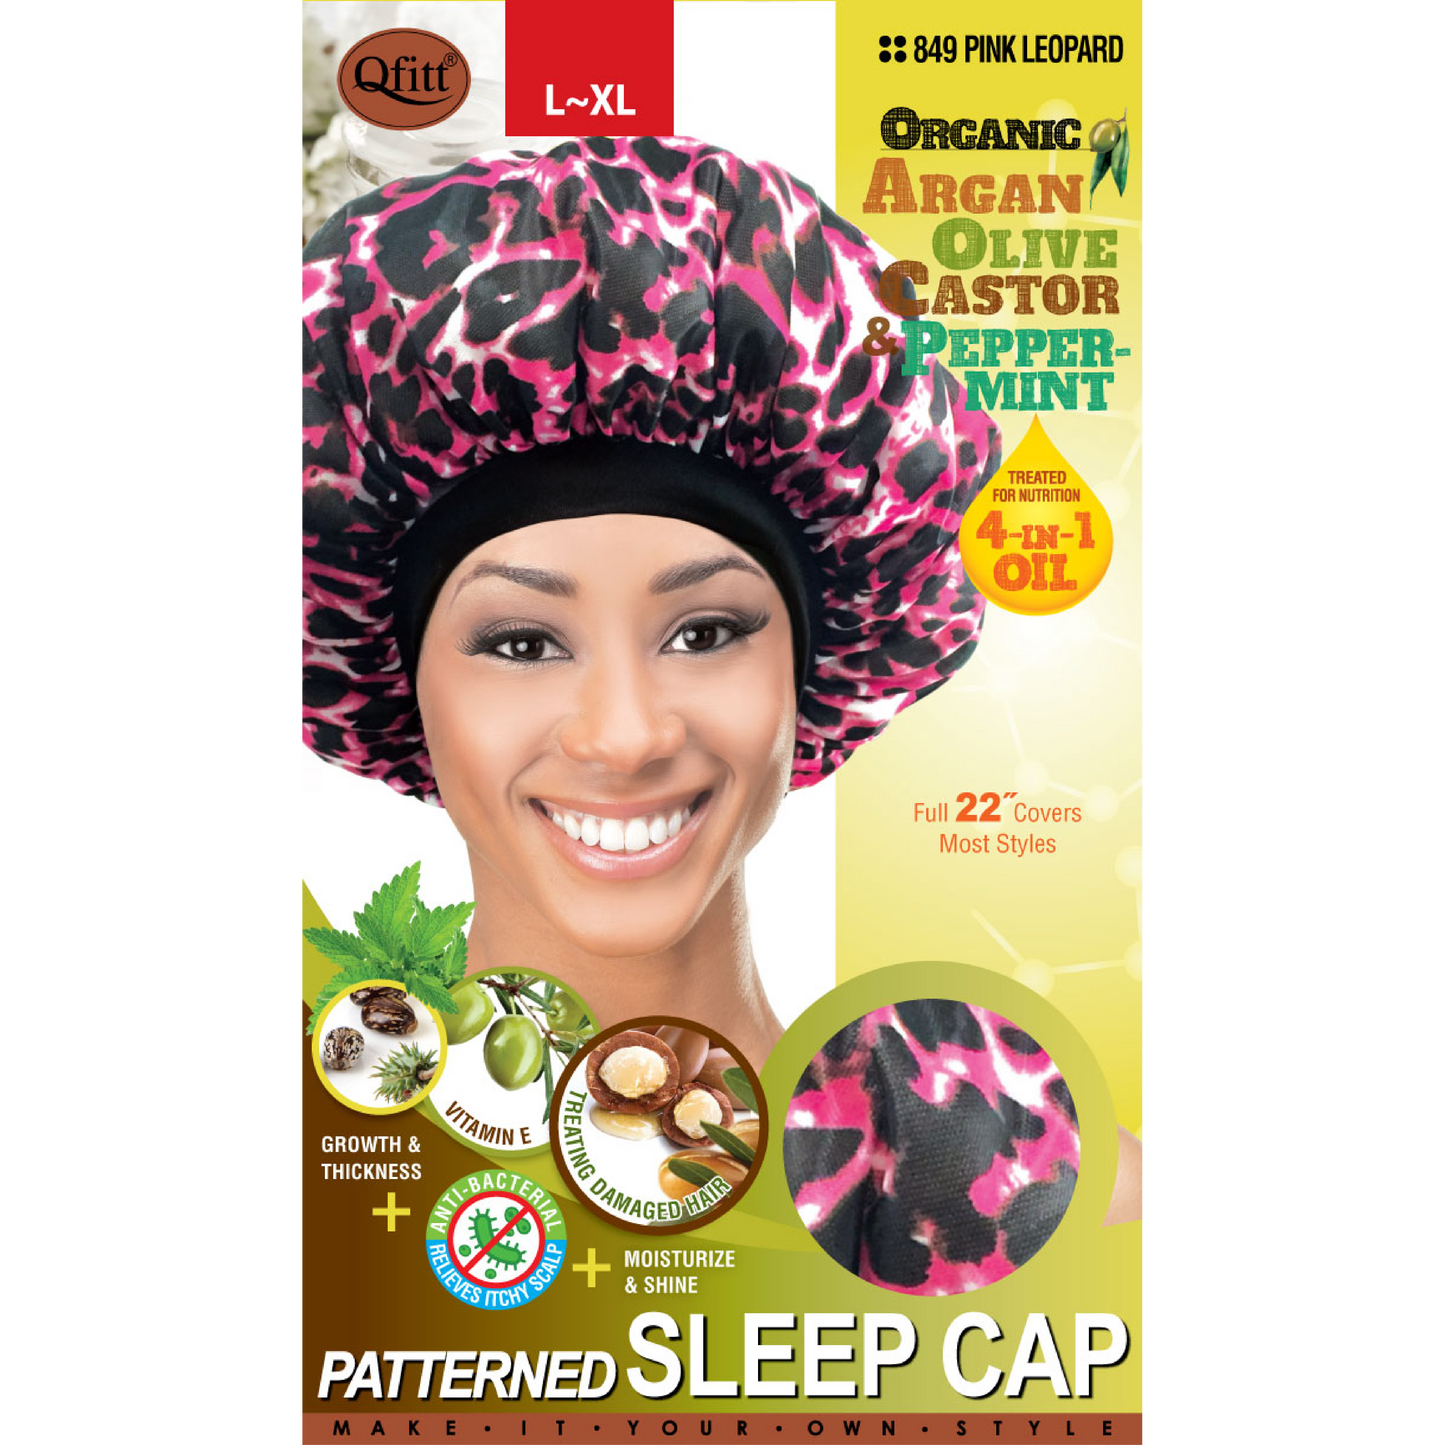 ORGANIC PATTERNED SLEEP CAP